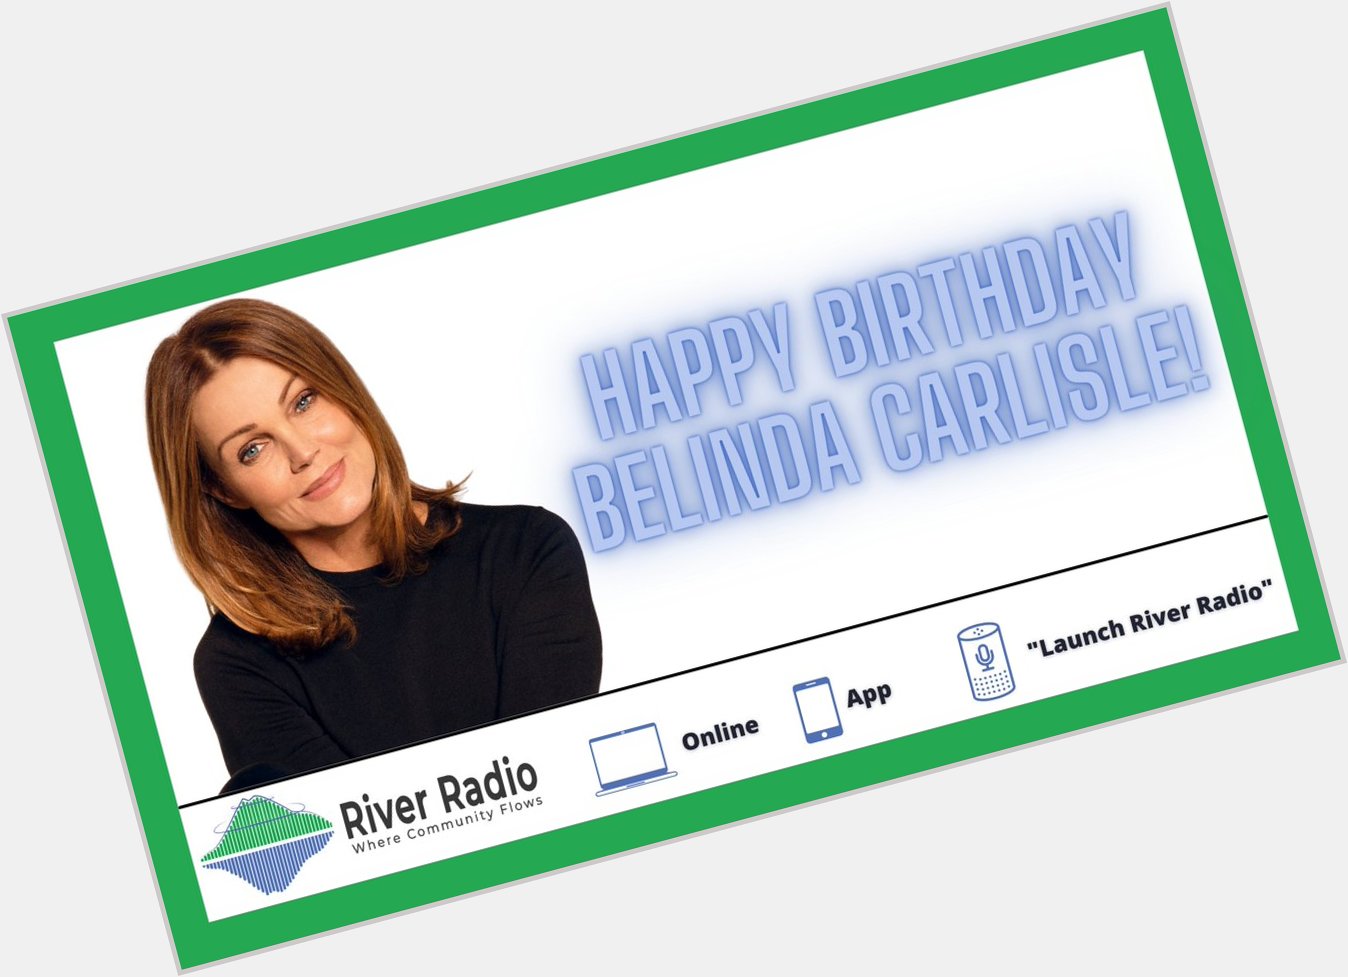 Happy Birthday Belinda Carlisle! 63 today!     